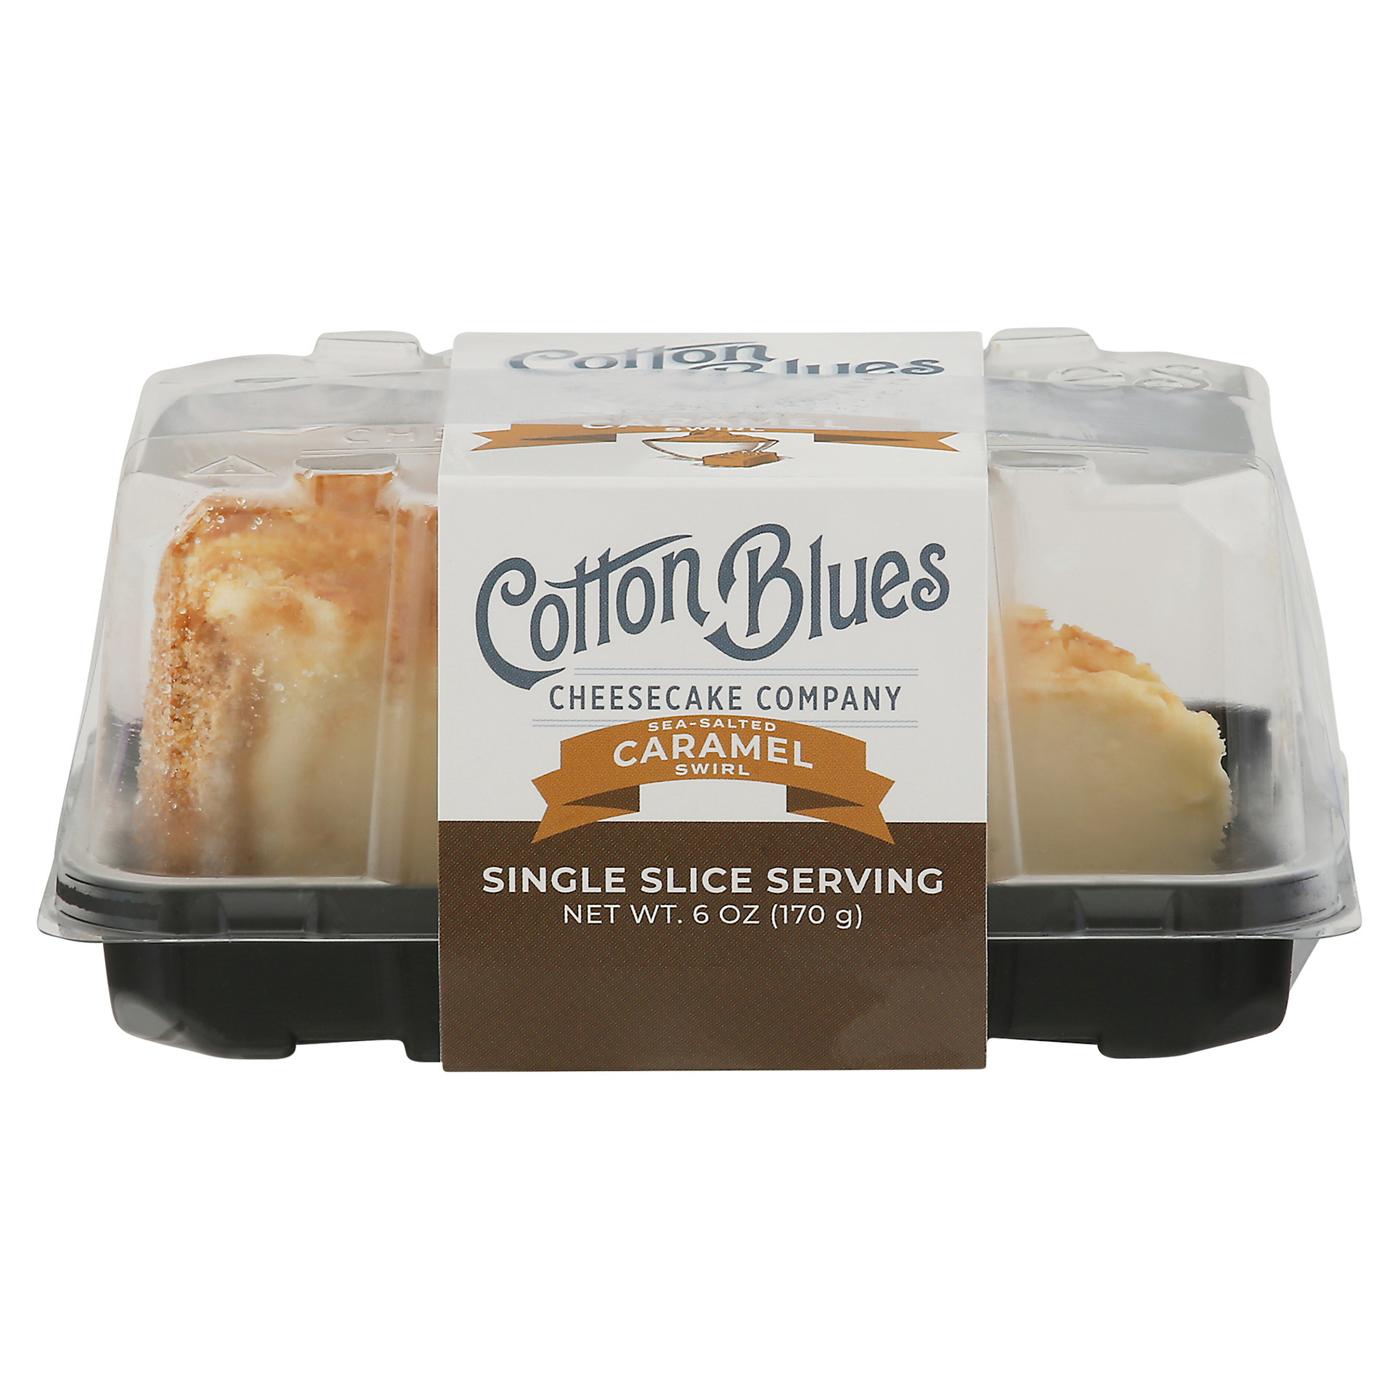 Cotton Blues Cheesecake Company Sea-Salted Caramel Swirl Cheesecake Slice ; image 1 of 2